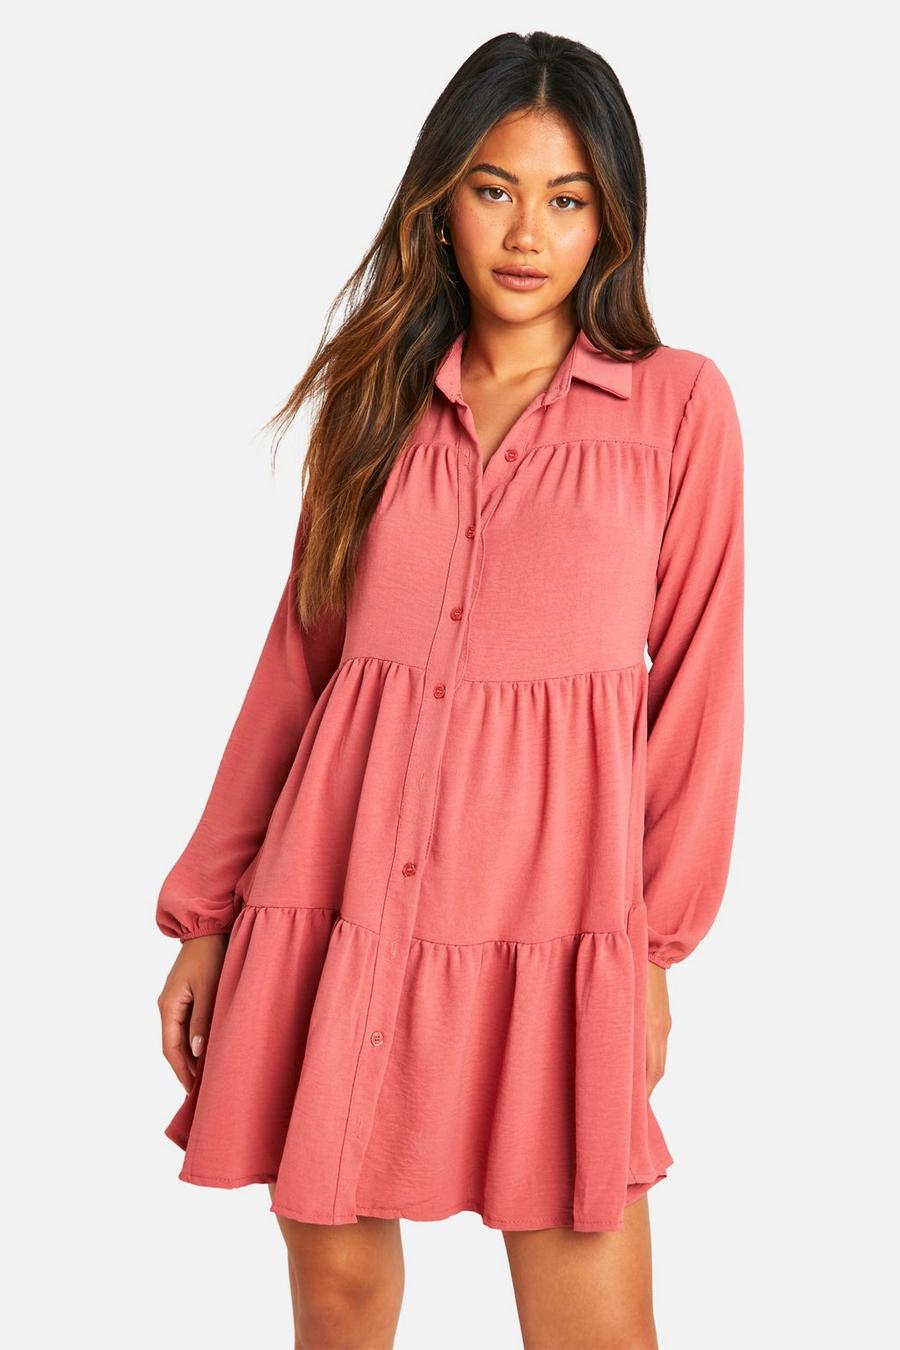 https://media.boohoo.com/i/boohoo/fzz21031_rose_xl/female-rose-tiered-smock-shirt-dress/?w=900&qlt=default&fmt.jp2.qlt=70&fmt=auto&sm=fit